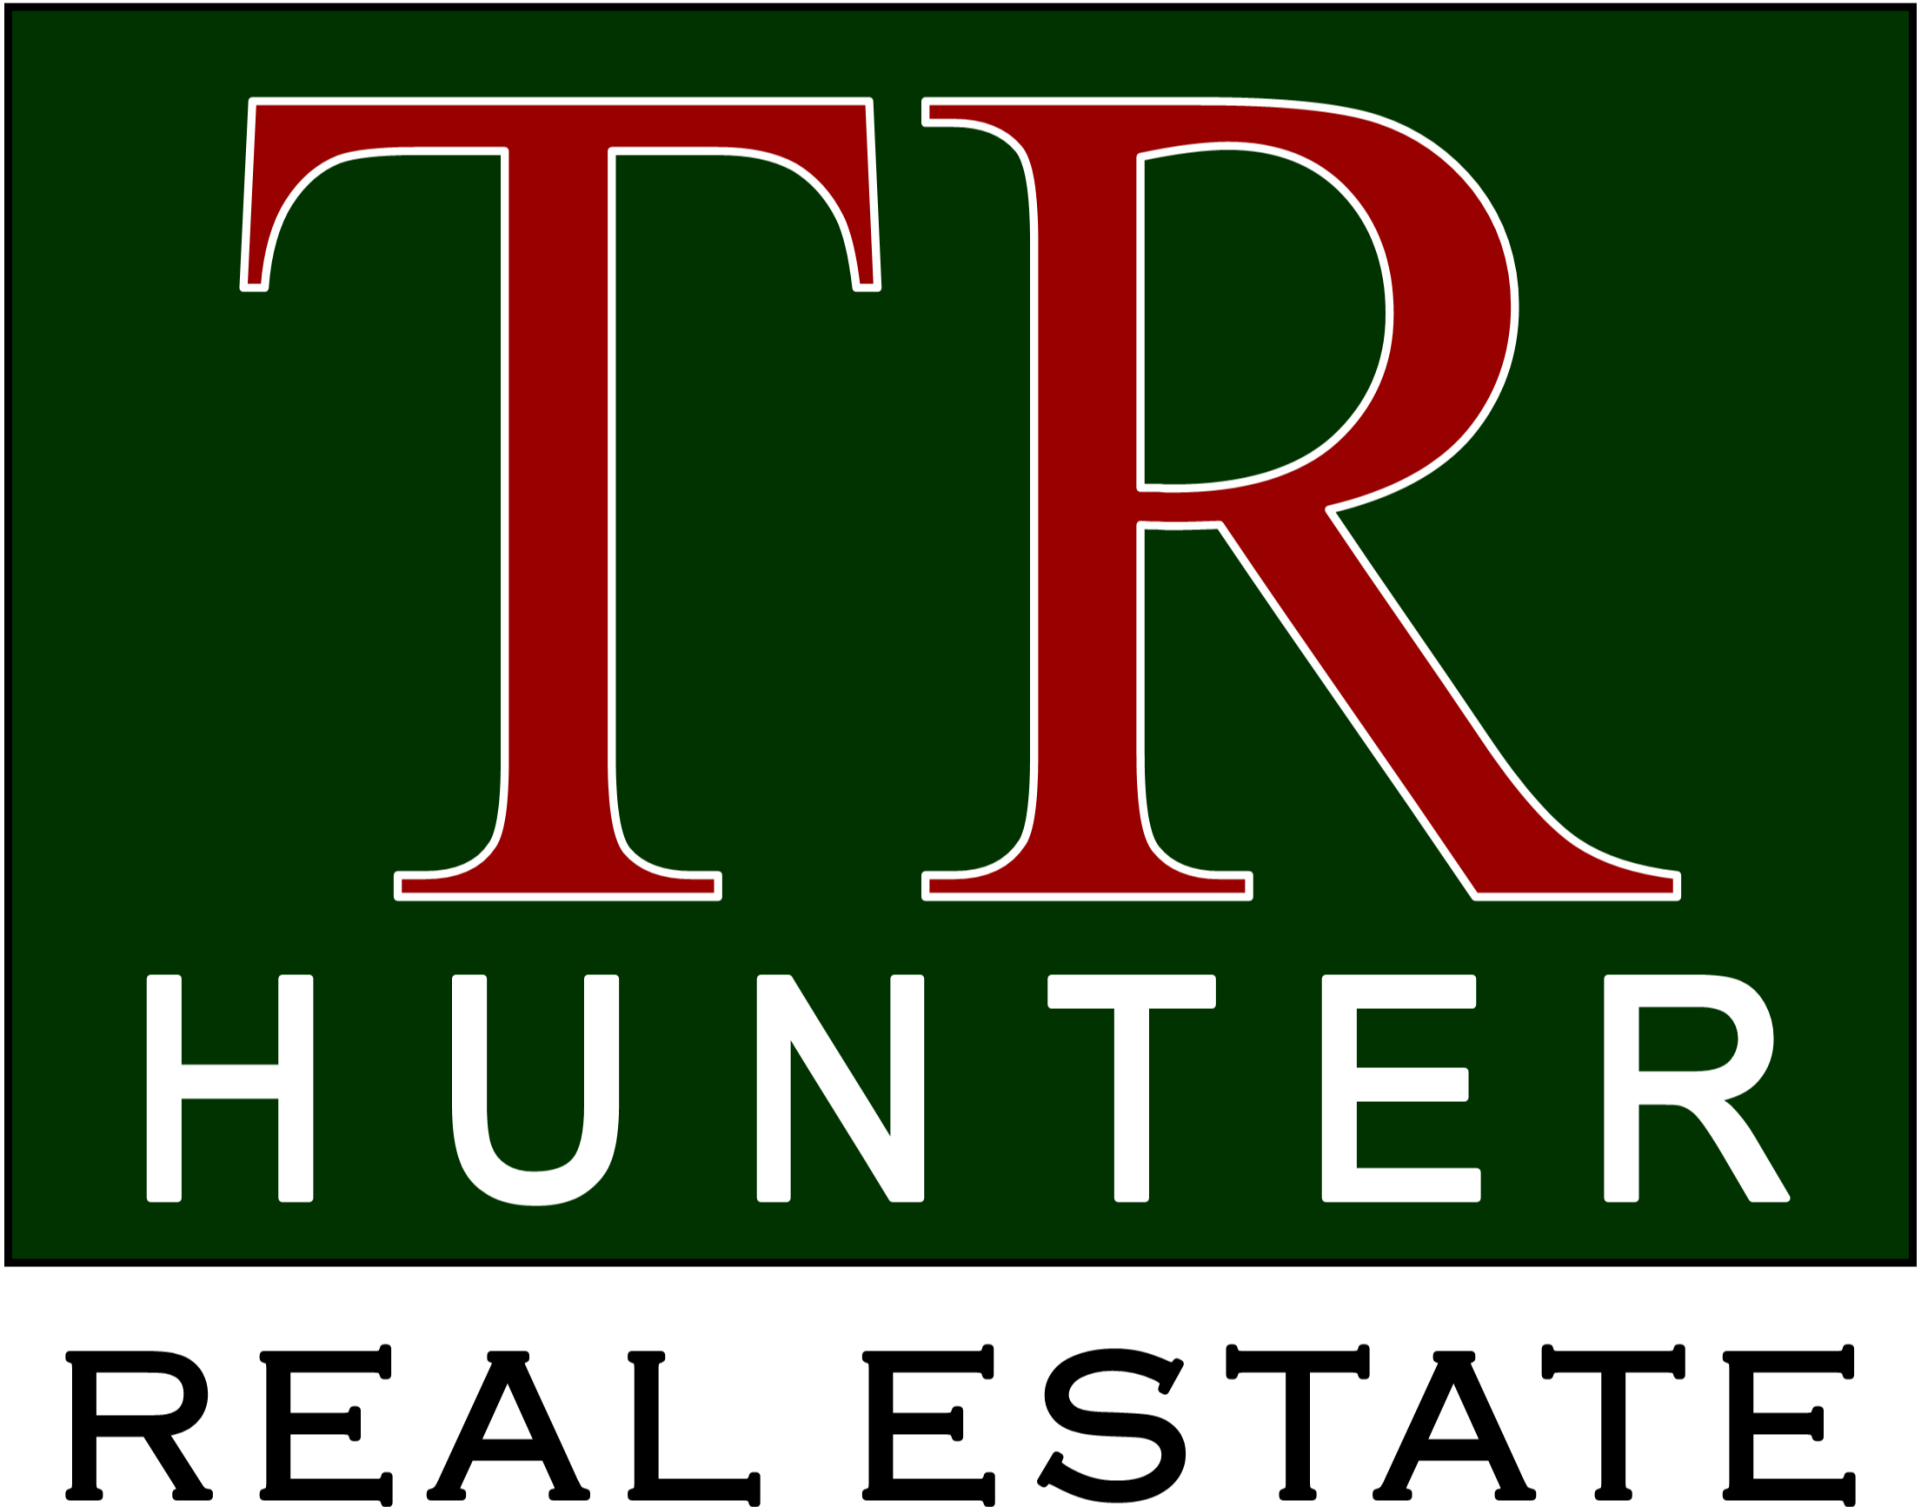 (c) Trhunter.com